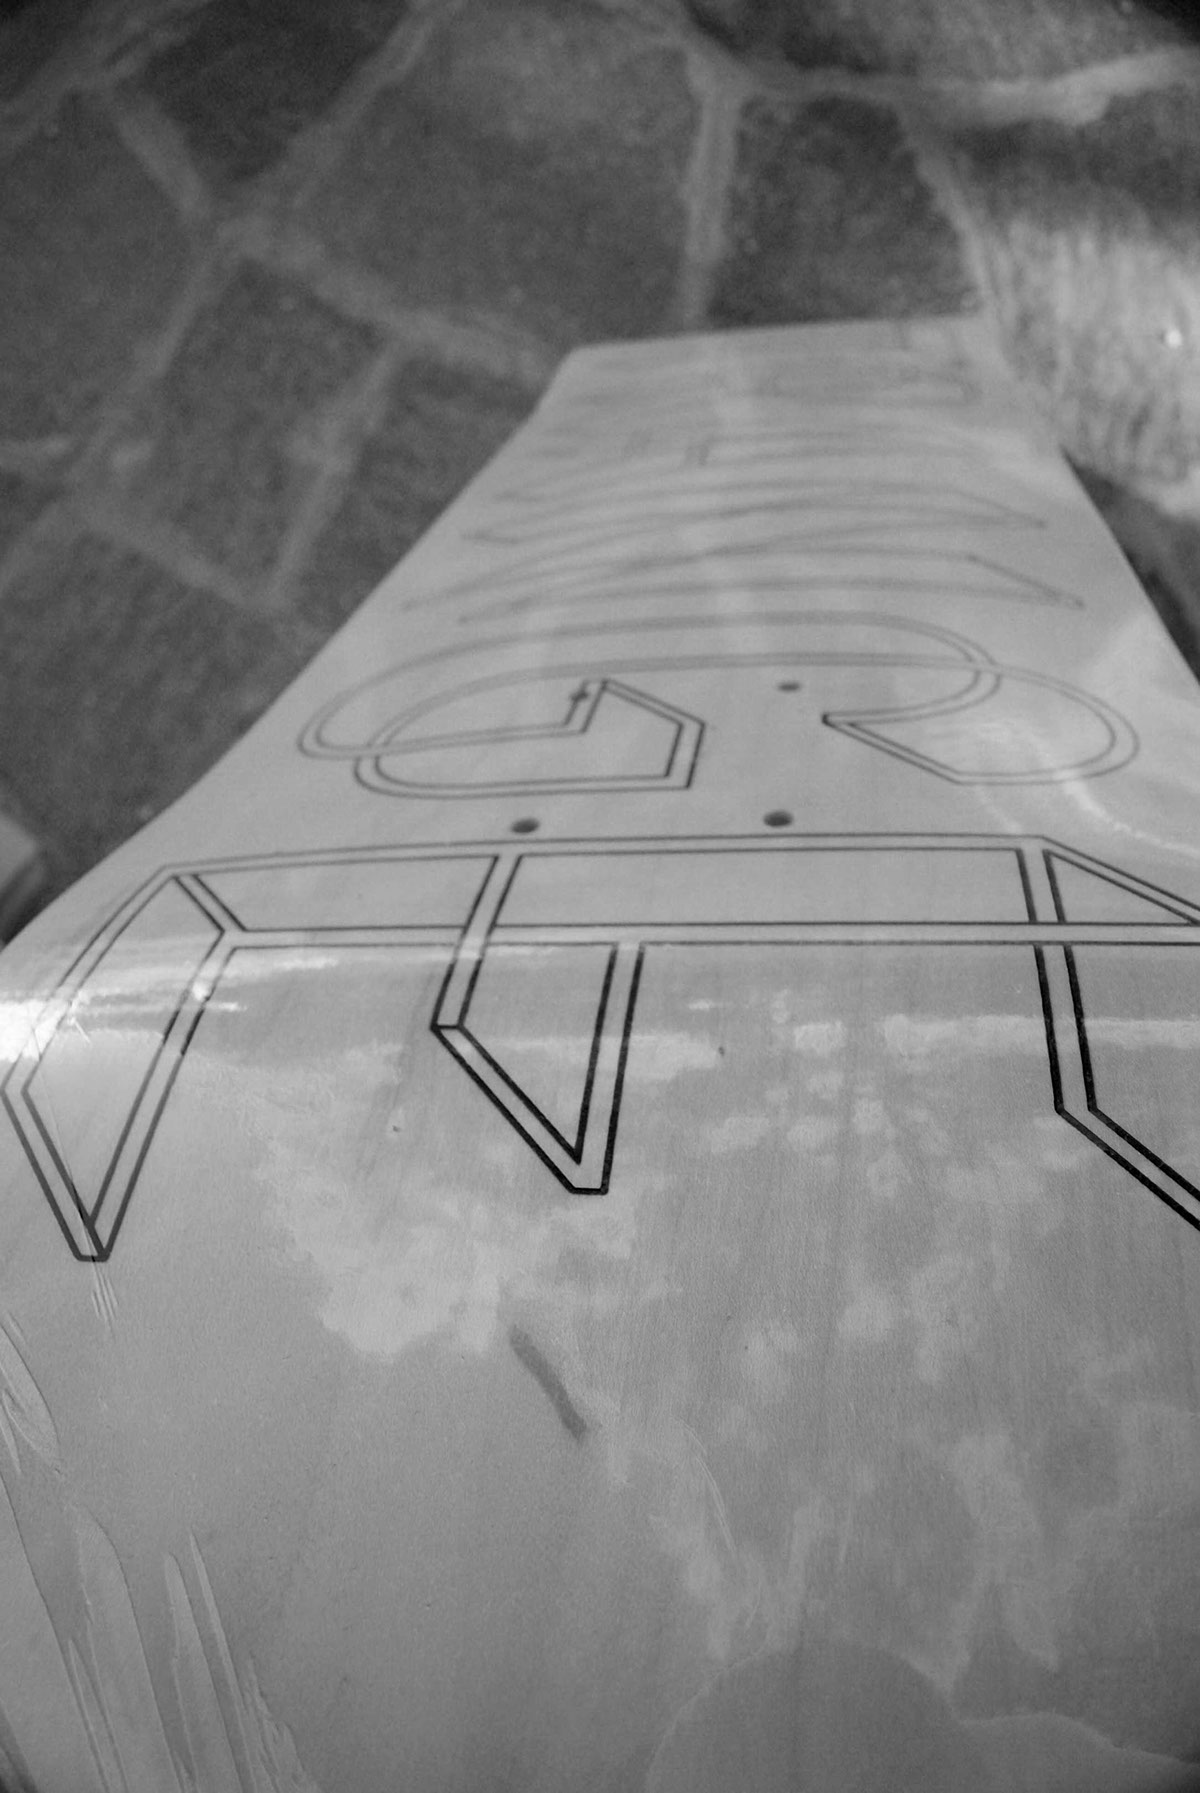 skateboards graphics strange lettering type impossible figure